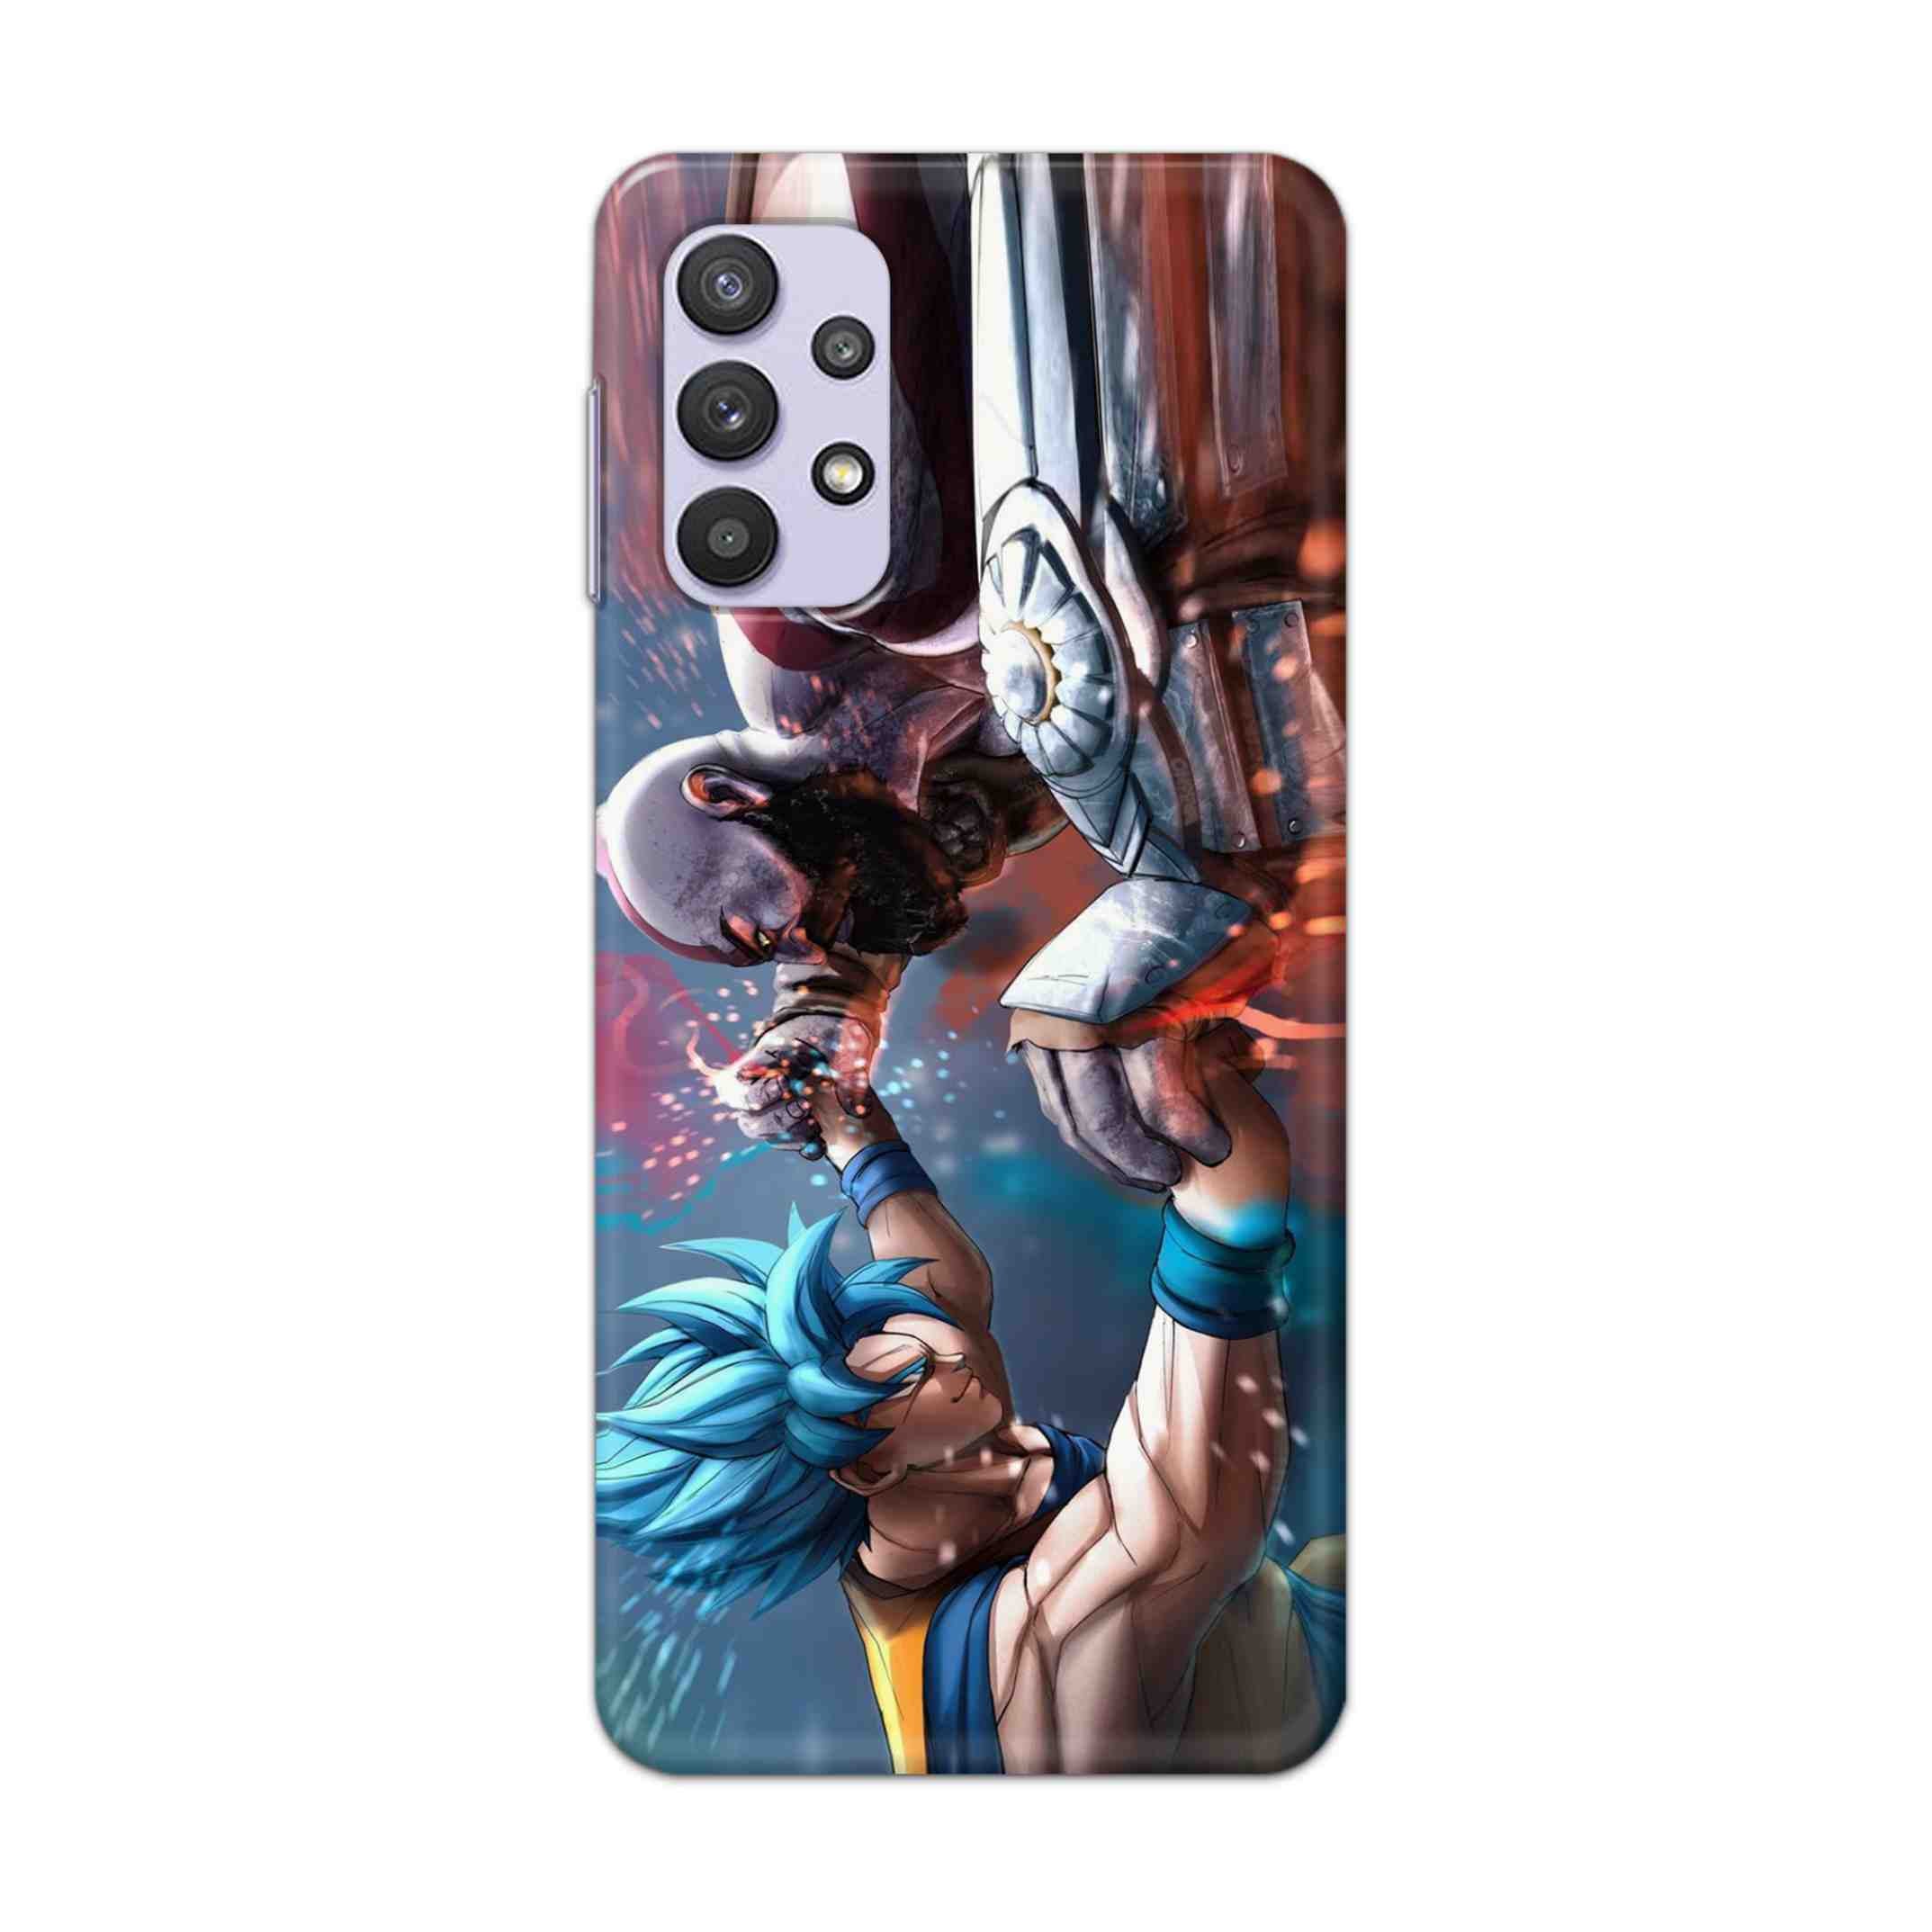 Buy Goku Vs Kratos Hard Back Mobile Phone Case Cover For Samsung A32 5G Online